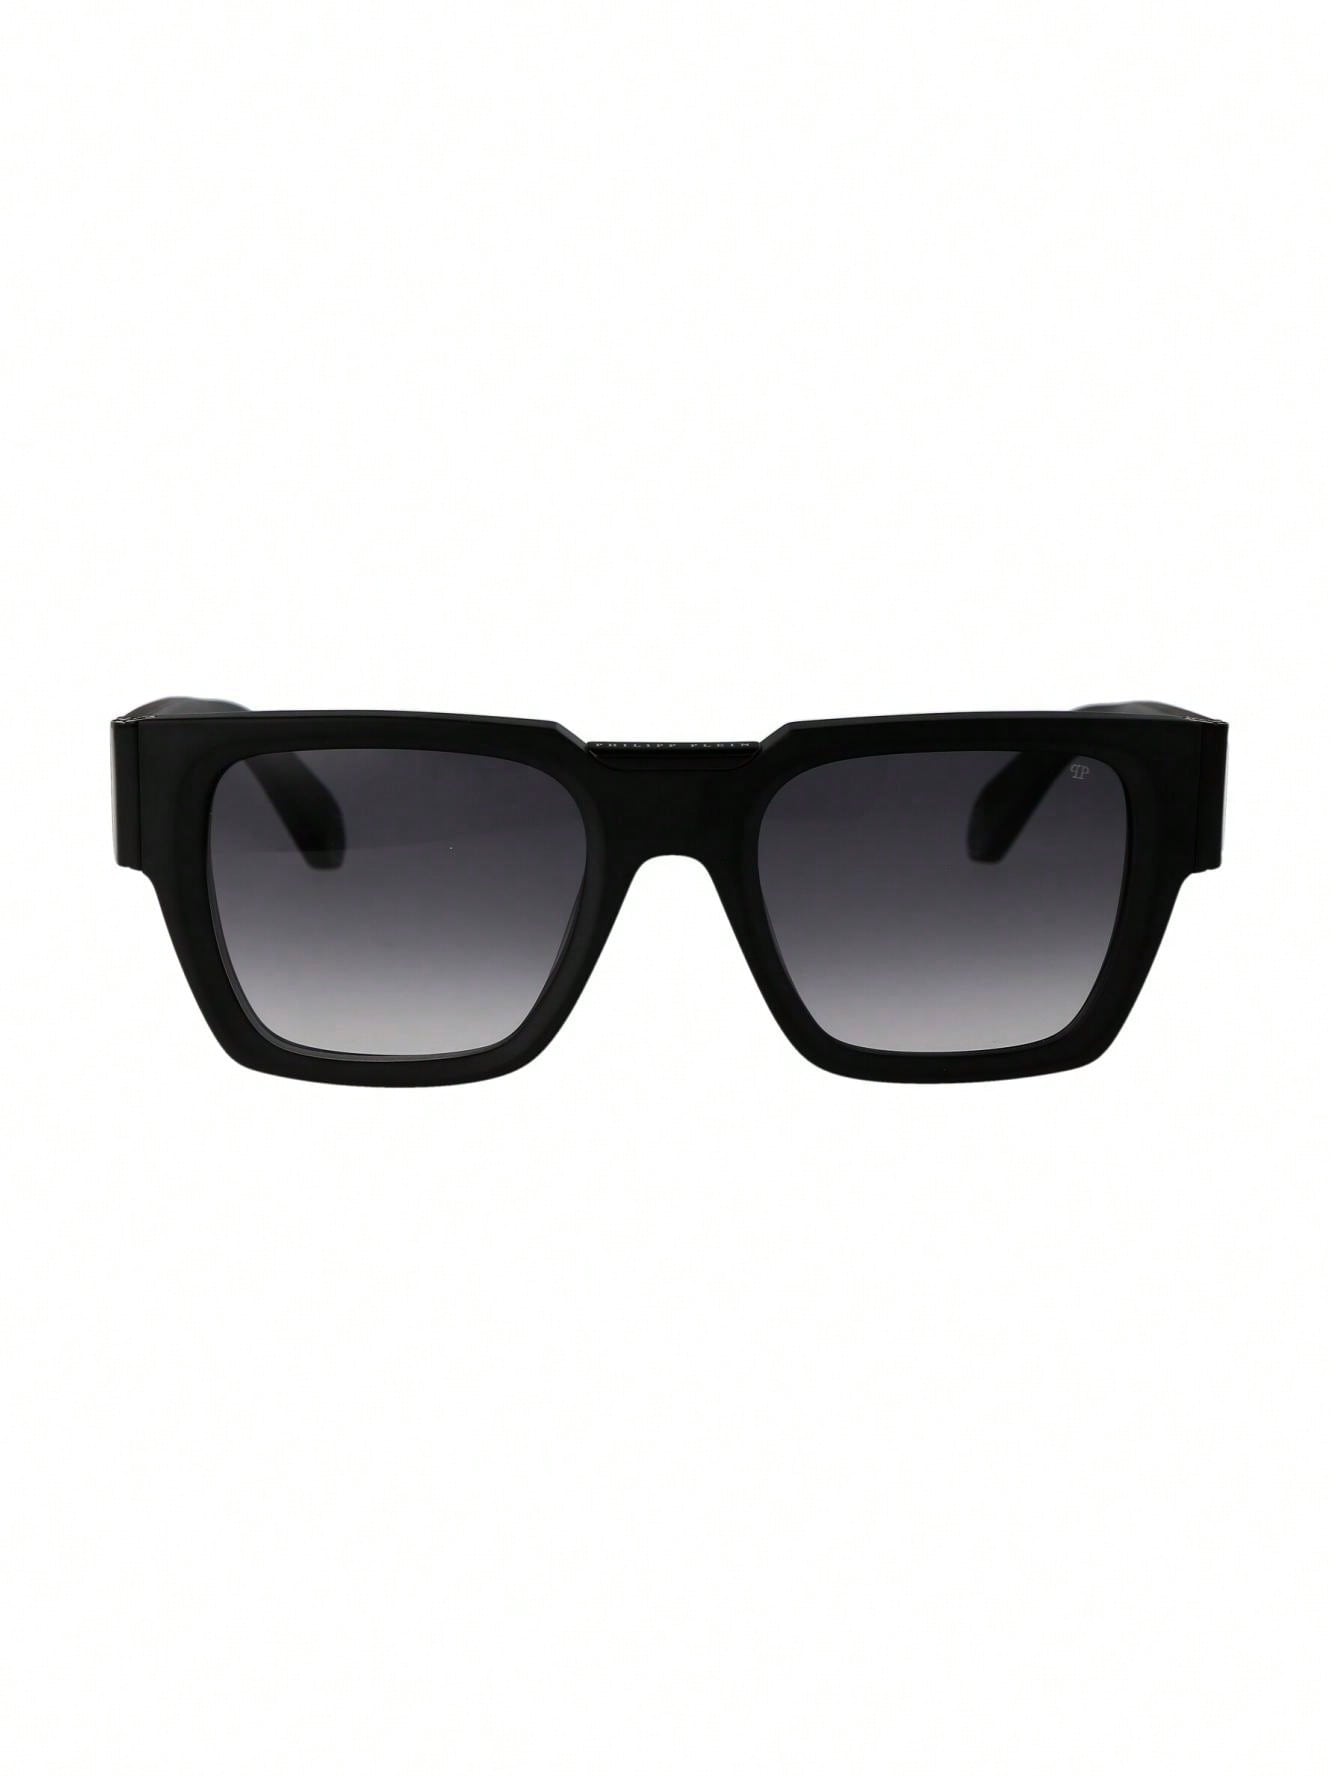 Мужские солнцезащитные очки Philipp Plein DECOR SPP095M0703, многоцветный солнцезащитные очки philipp plein 006m 890x